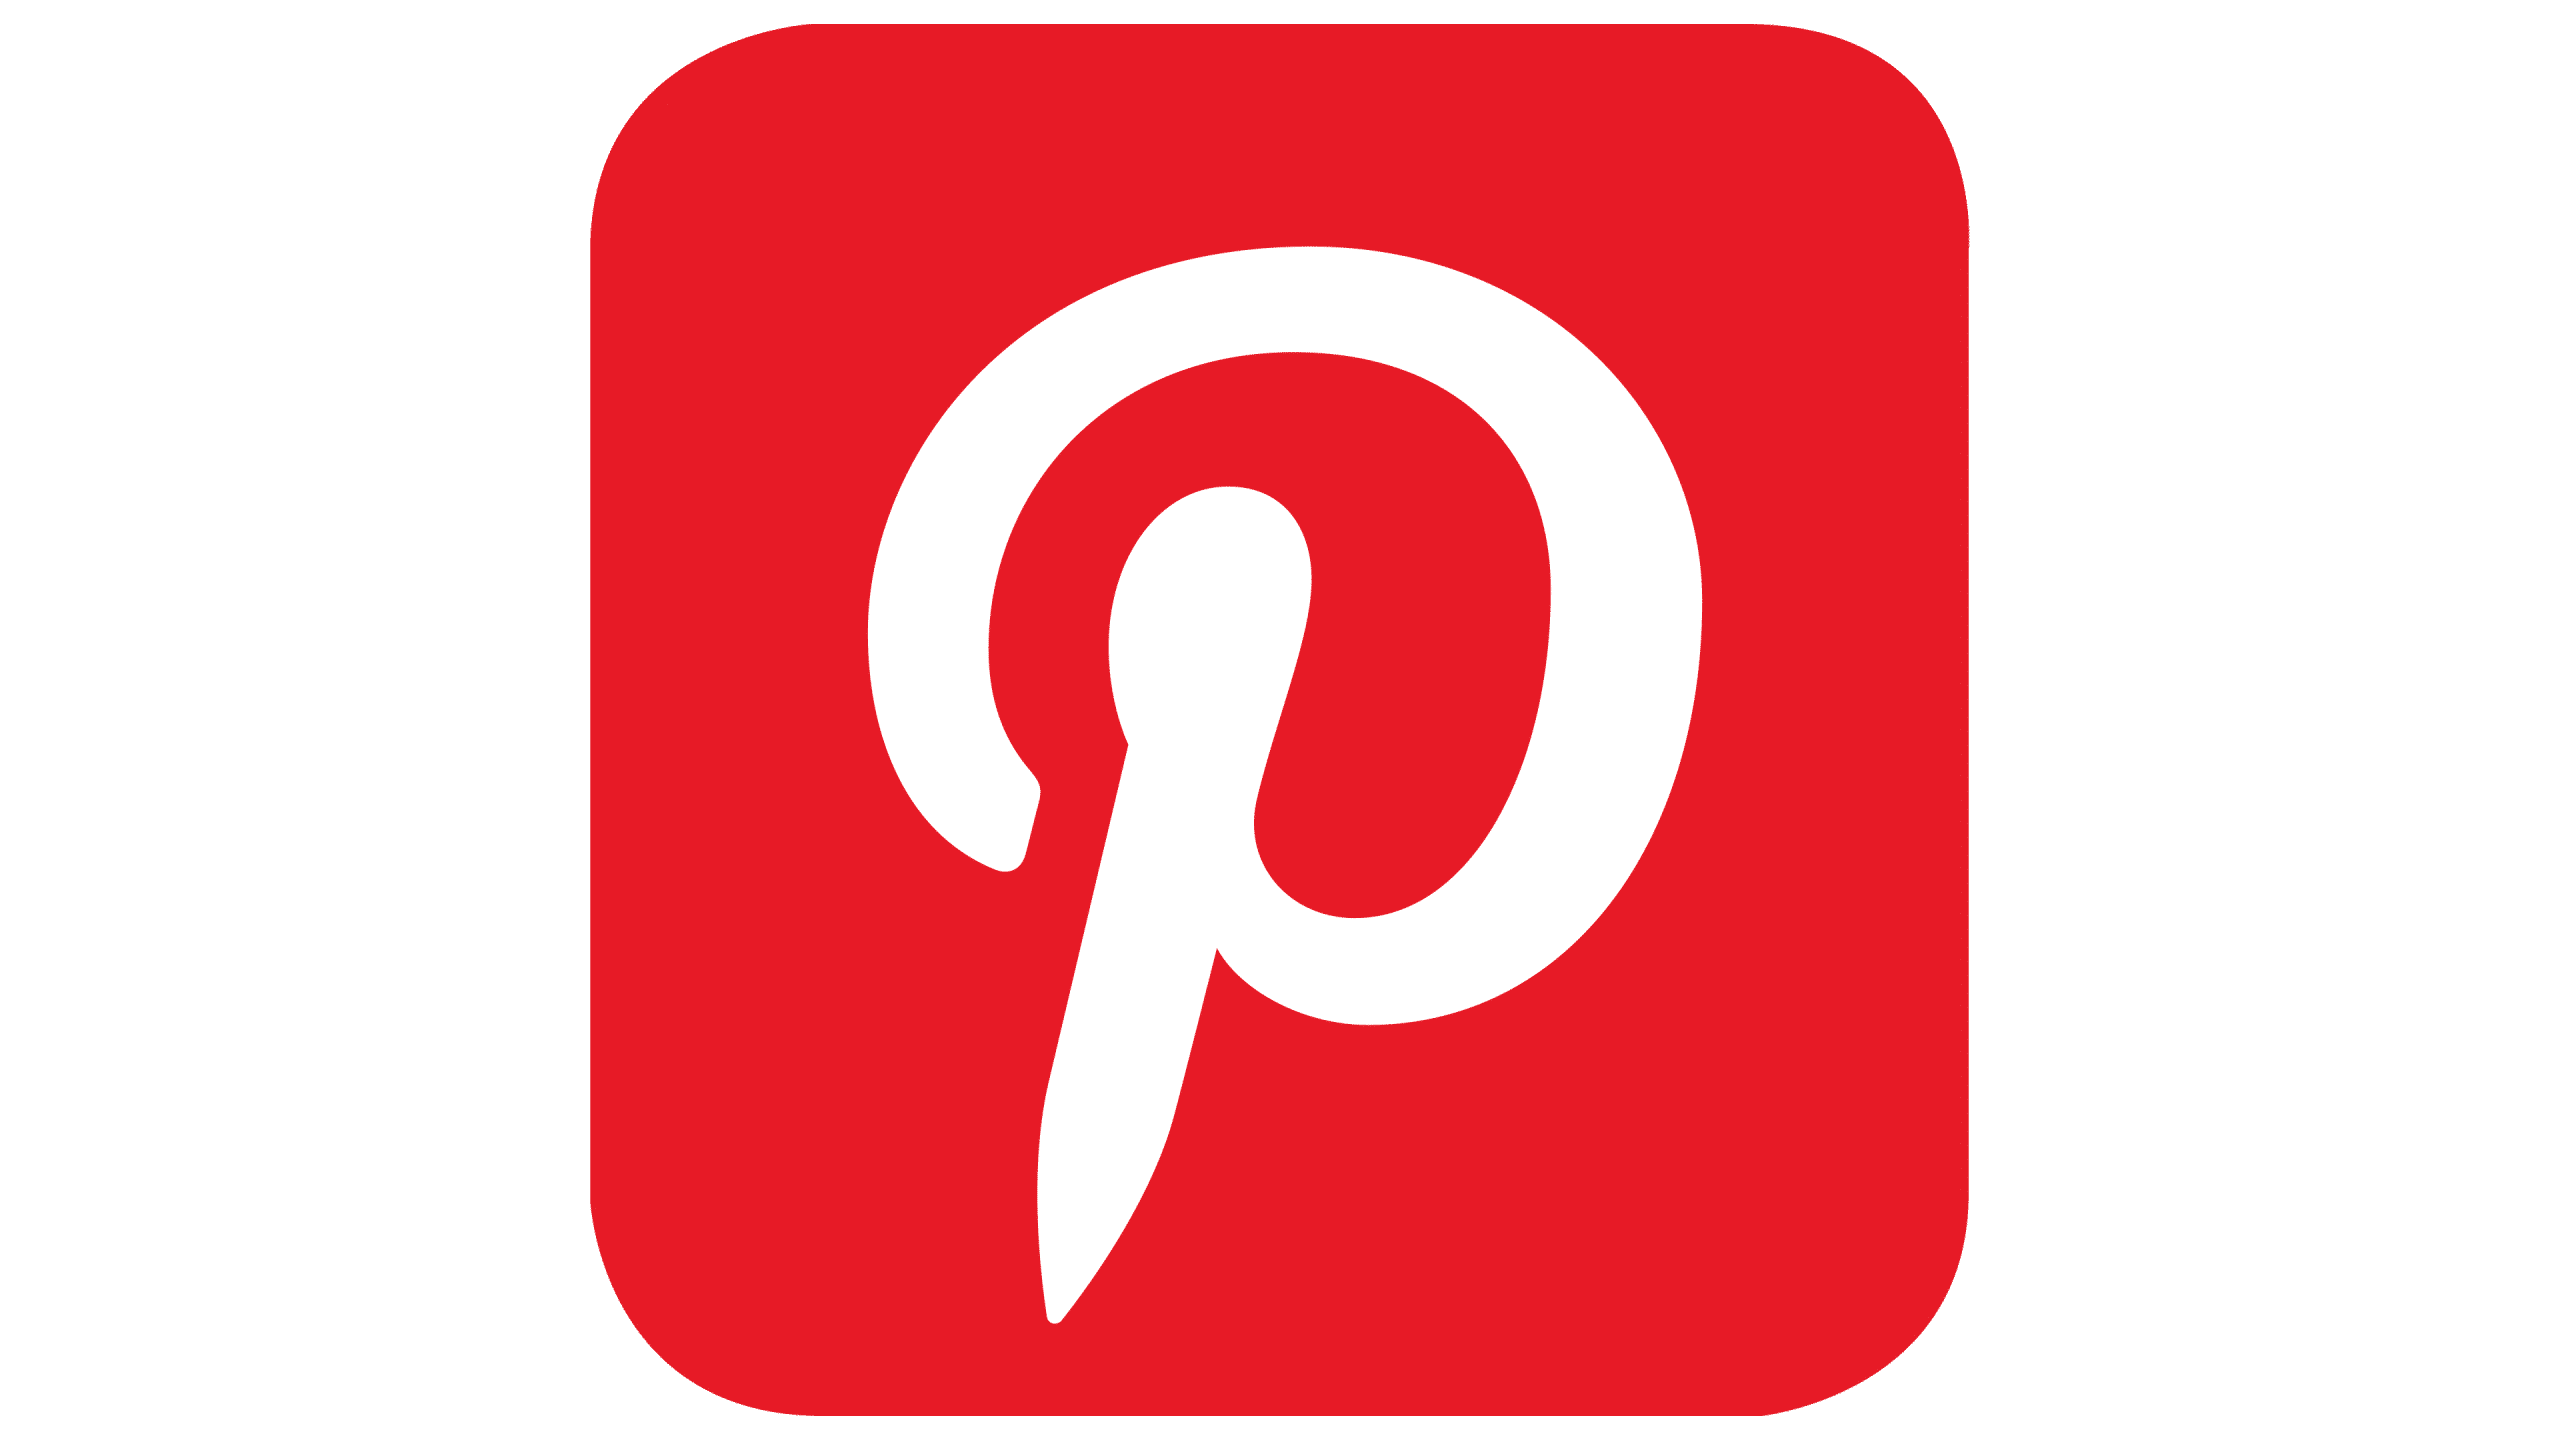 Pinterest shares